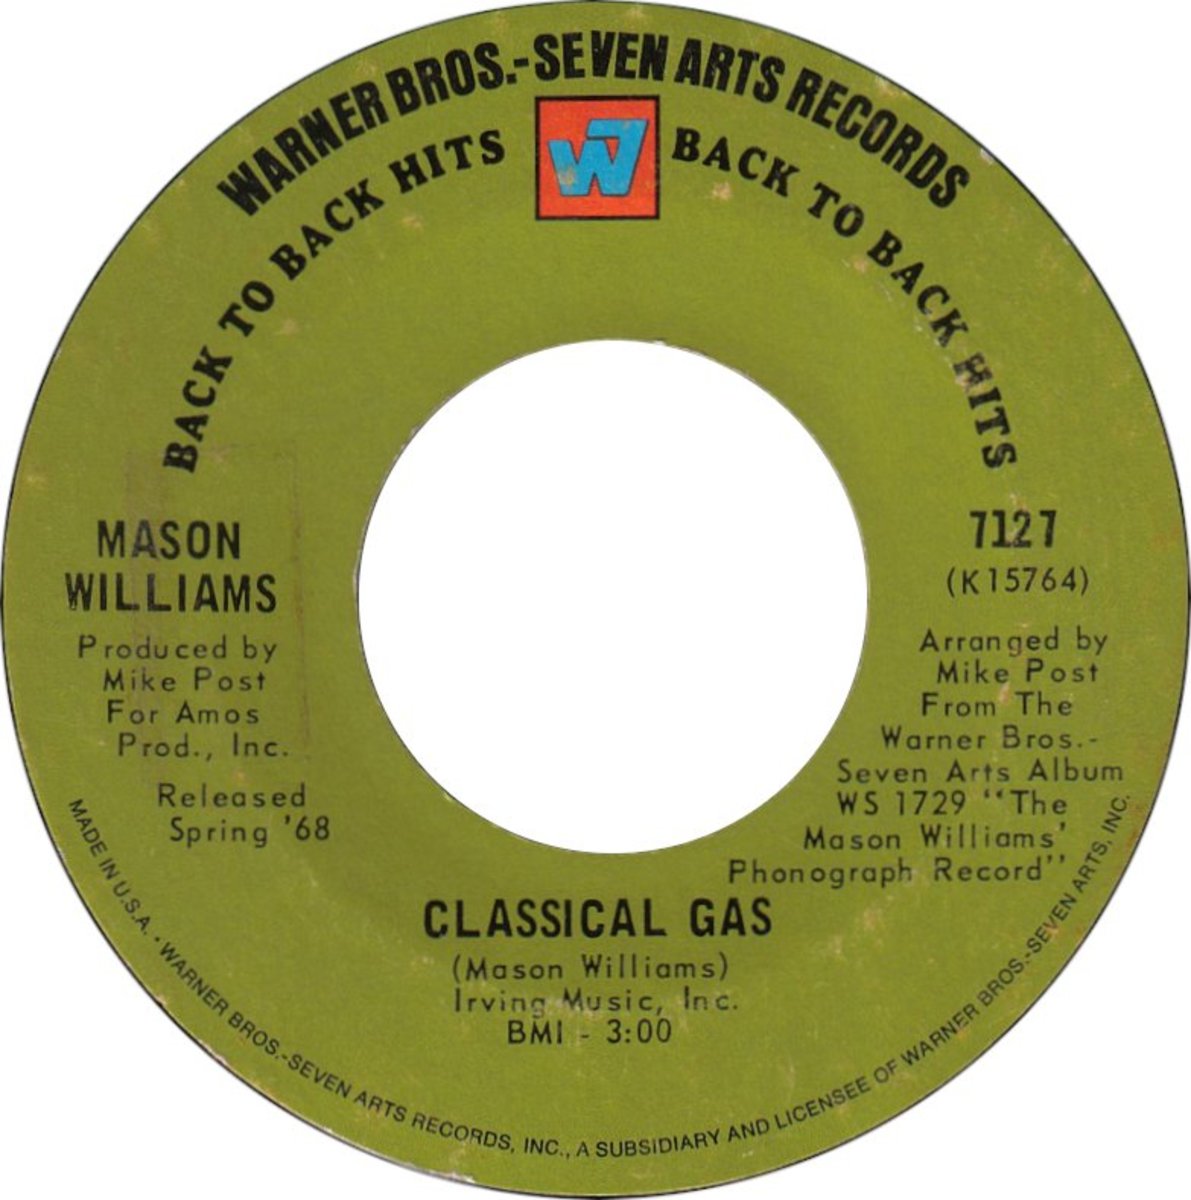 mason-williams-classical-gas-warner-bros-back-to-back-hits